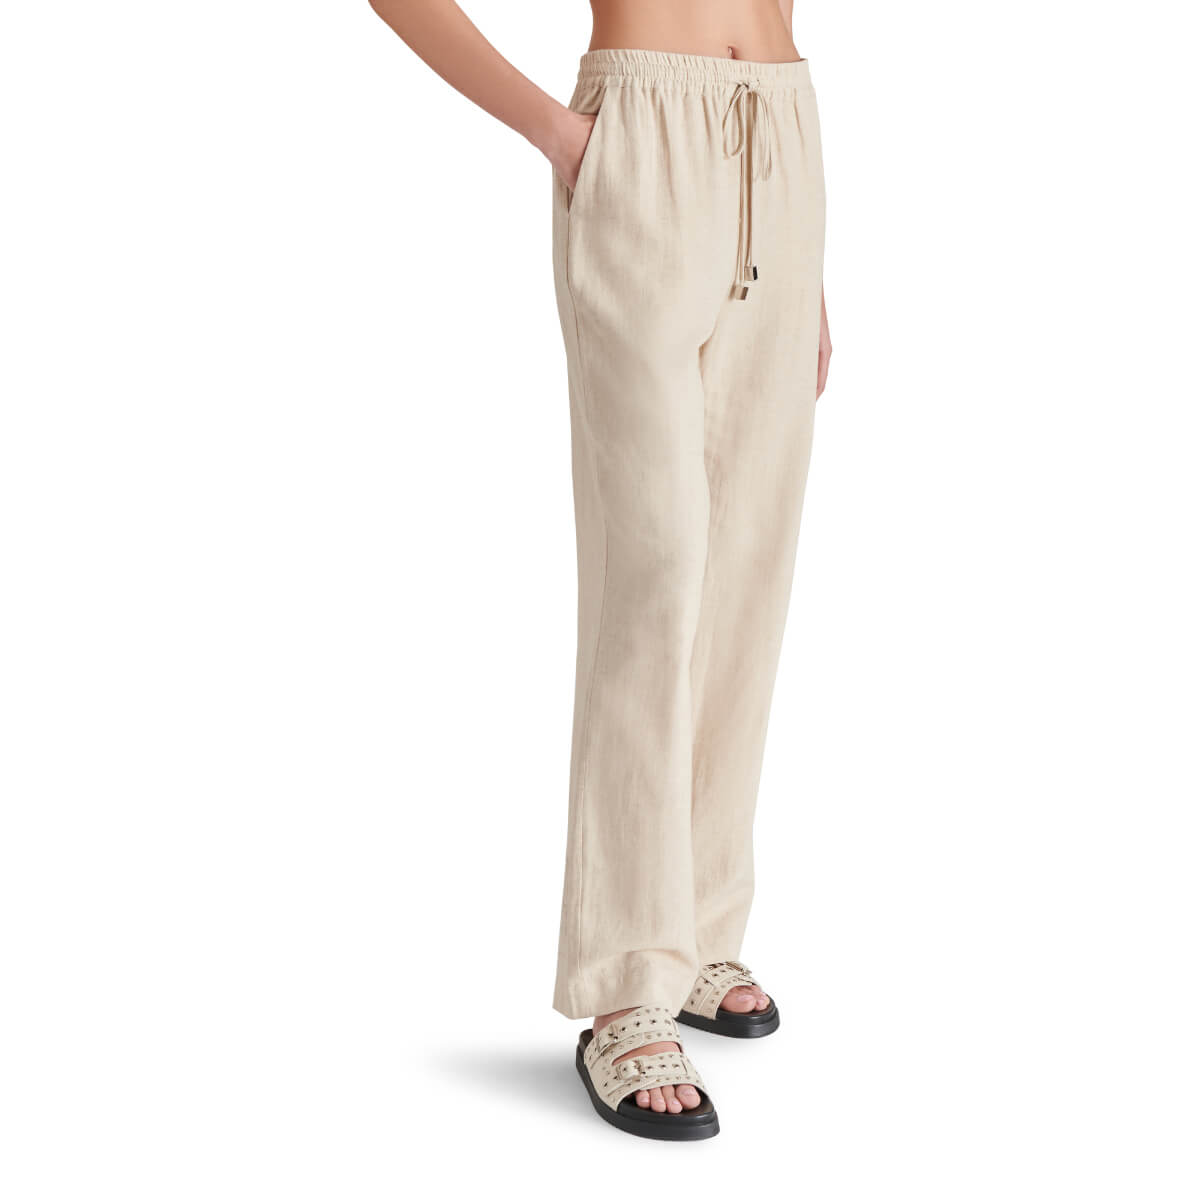 Steve Madden Venetia Drawstring Pants natural side | MILK MONEY milkmoney.co | cute pants for women. cute trendy pants. 